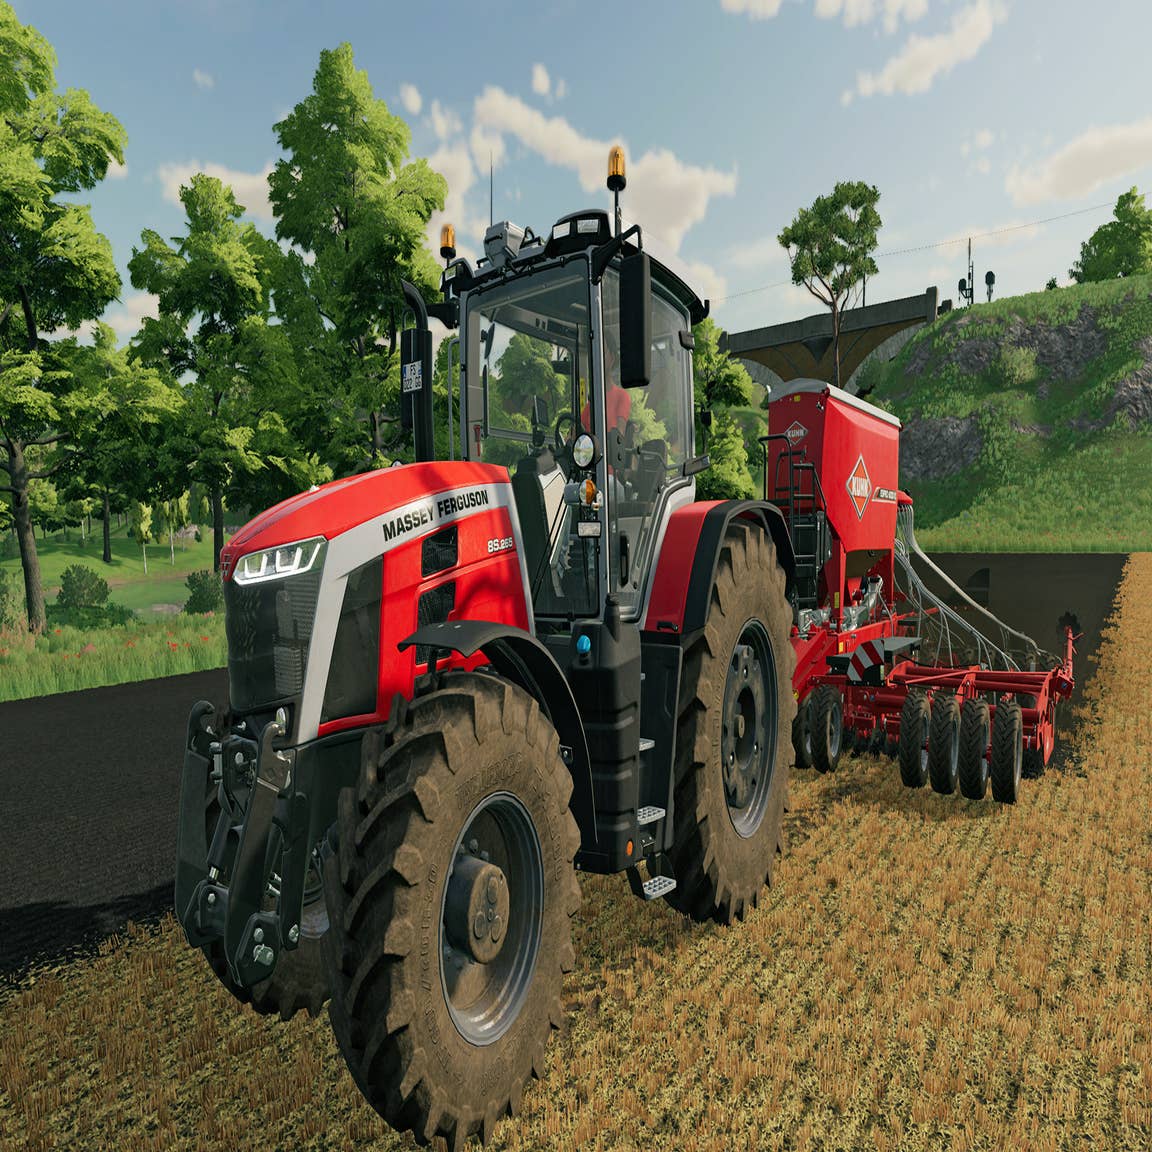 Meet the real-life farmers who play Farming Simulator, Simulation games